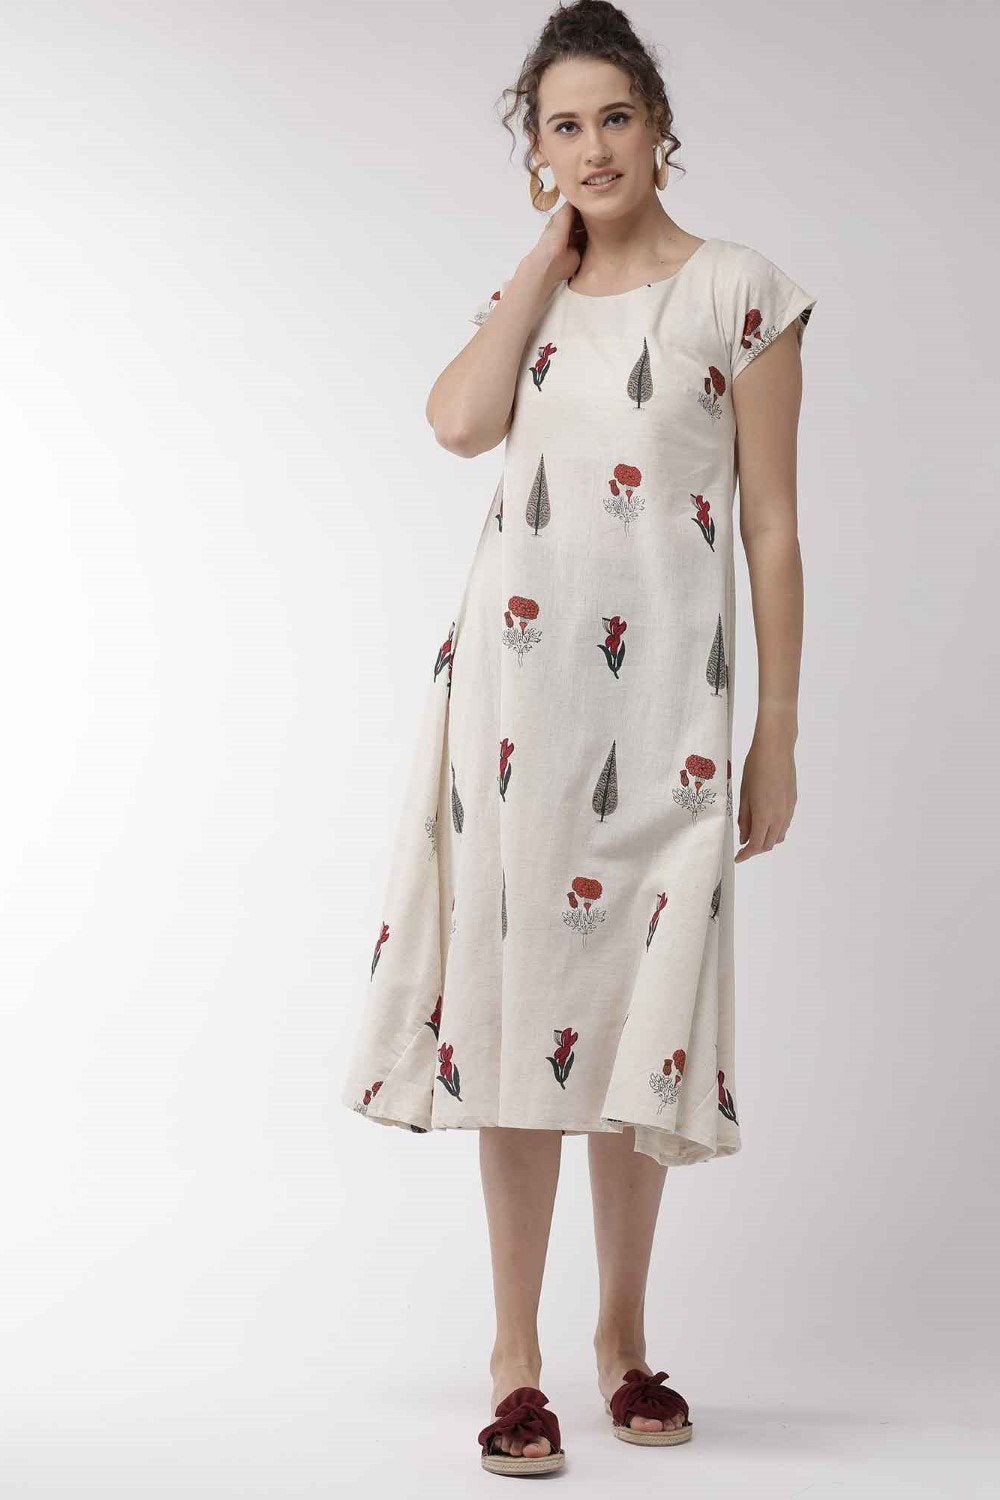 Women's Muria Groovy Art Dress - InWeave